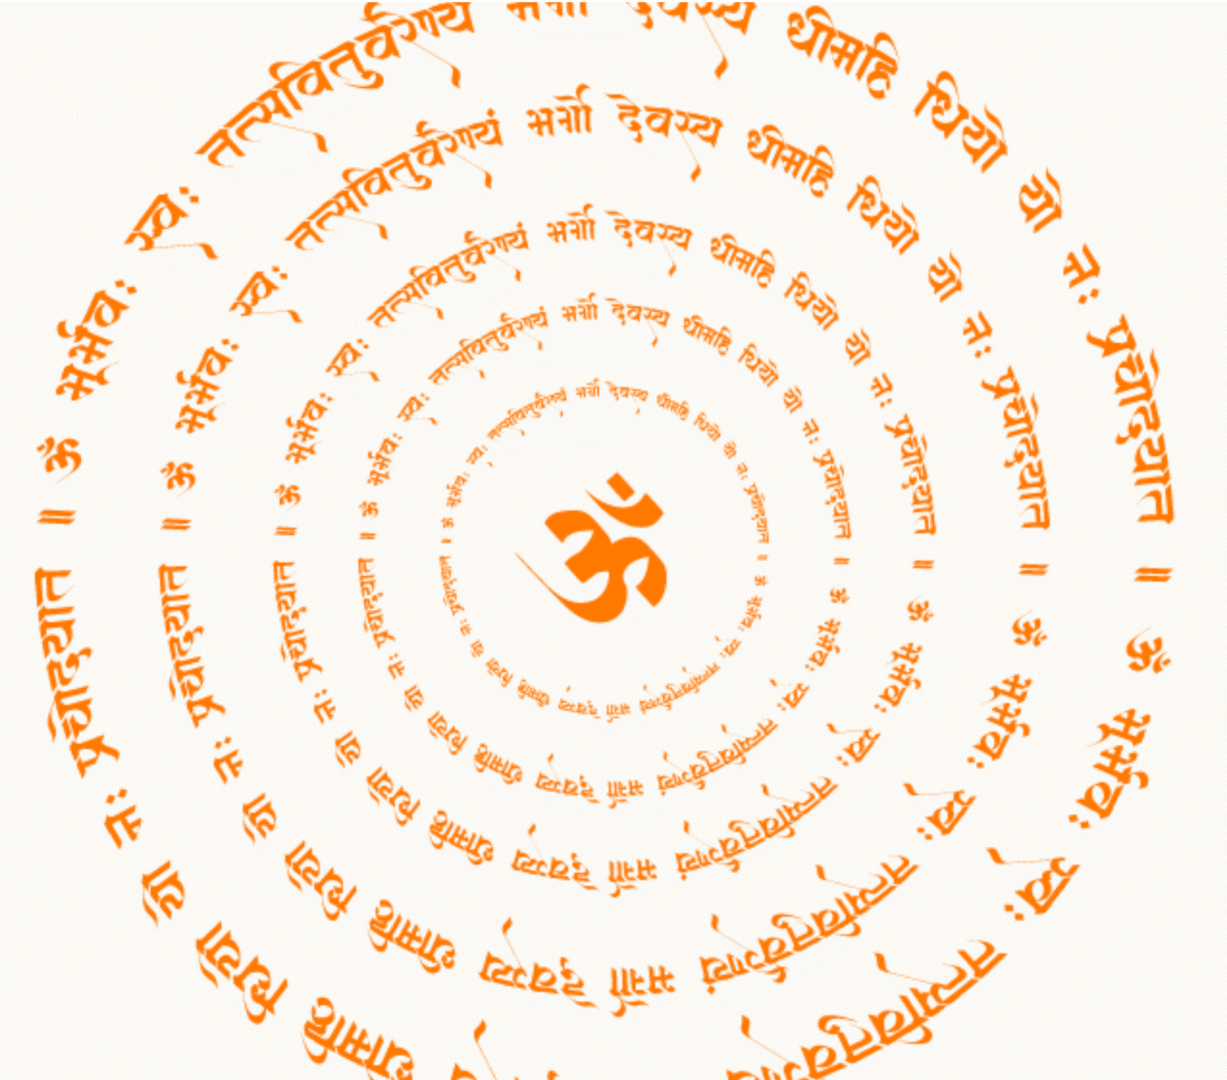 The Gayatri mantra written round in a circle in orange writing